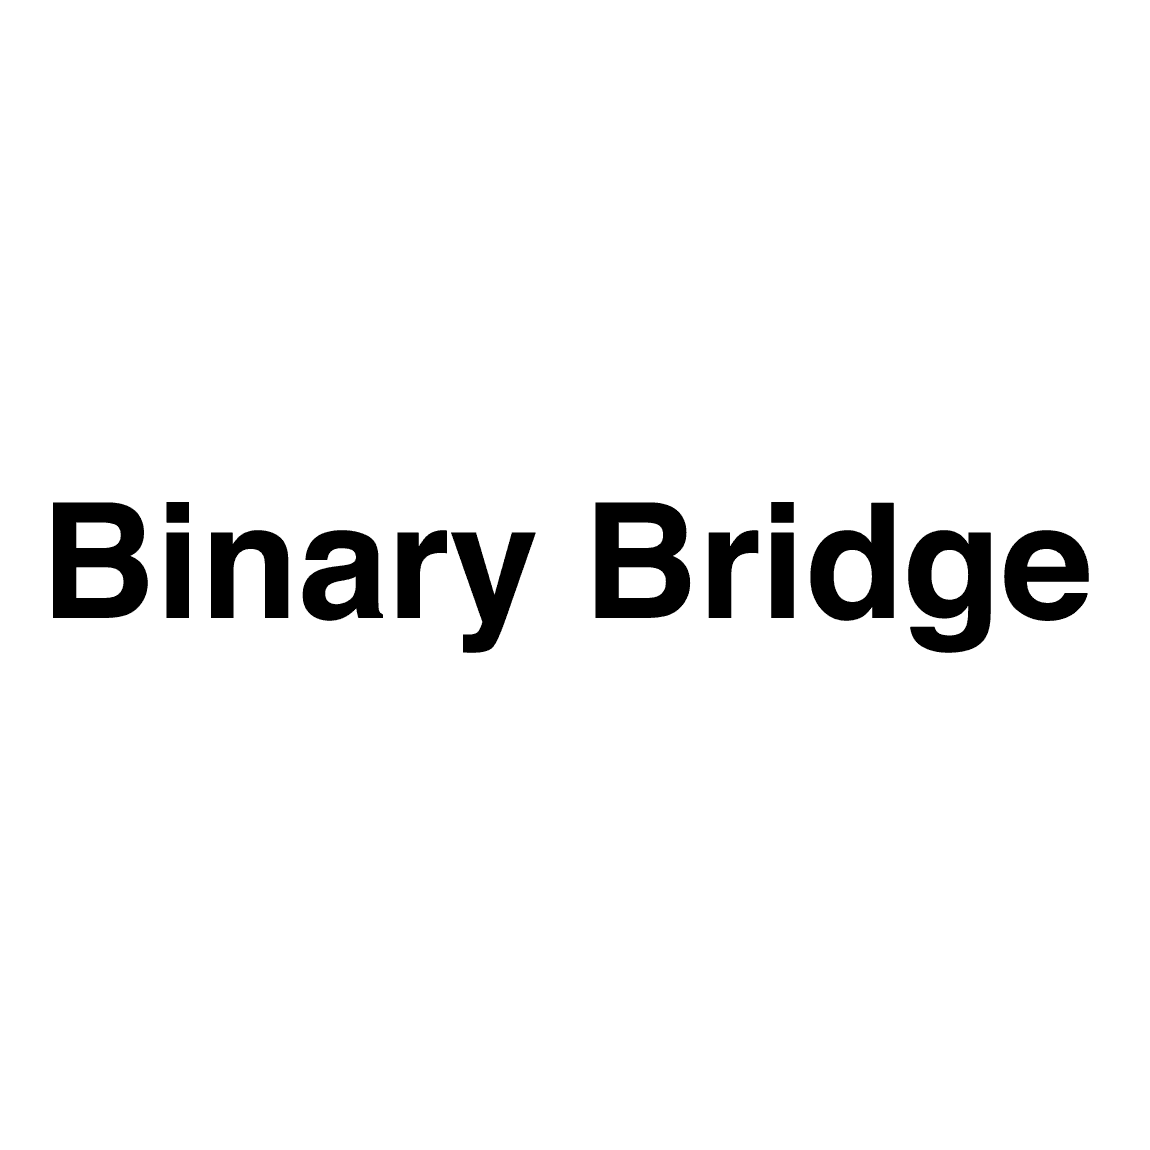 /assets/images/customer-interview/binarybridge/binarybridge-logo.png